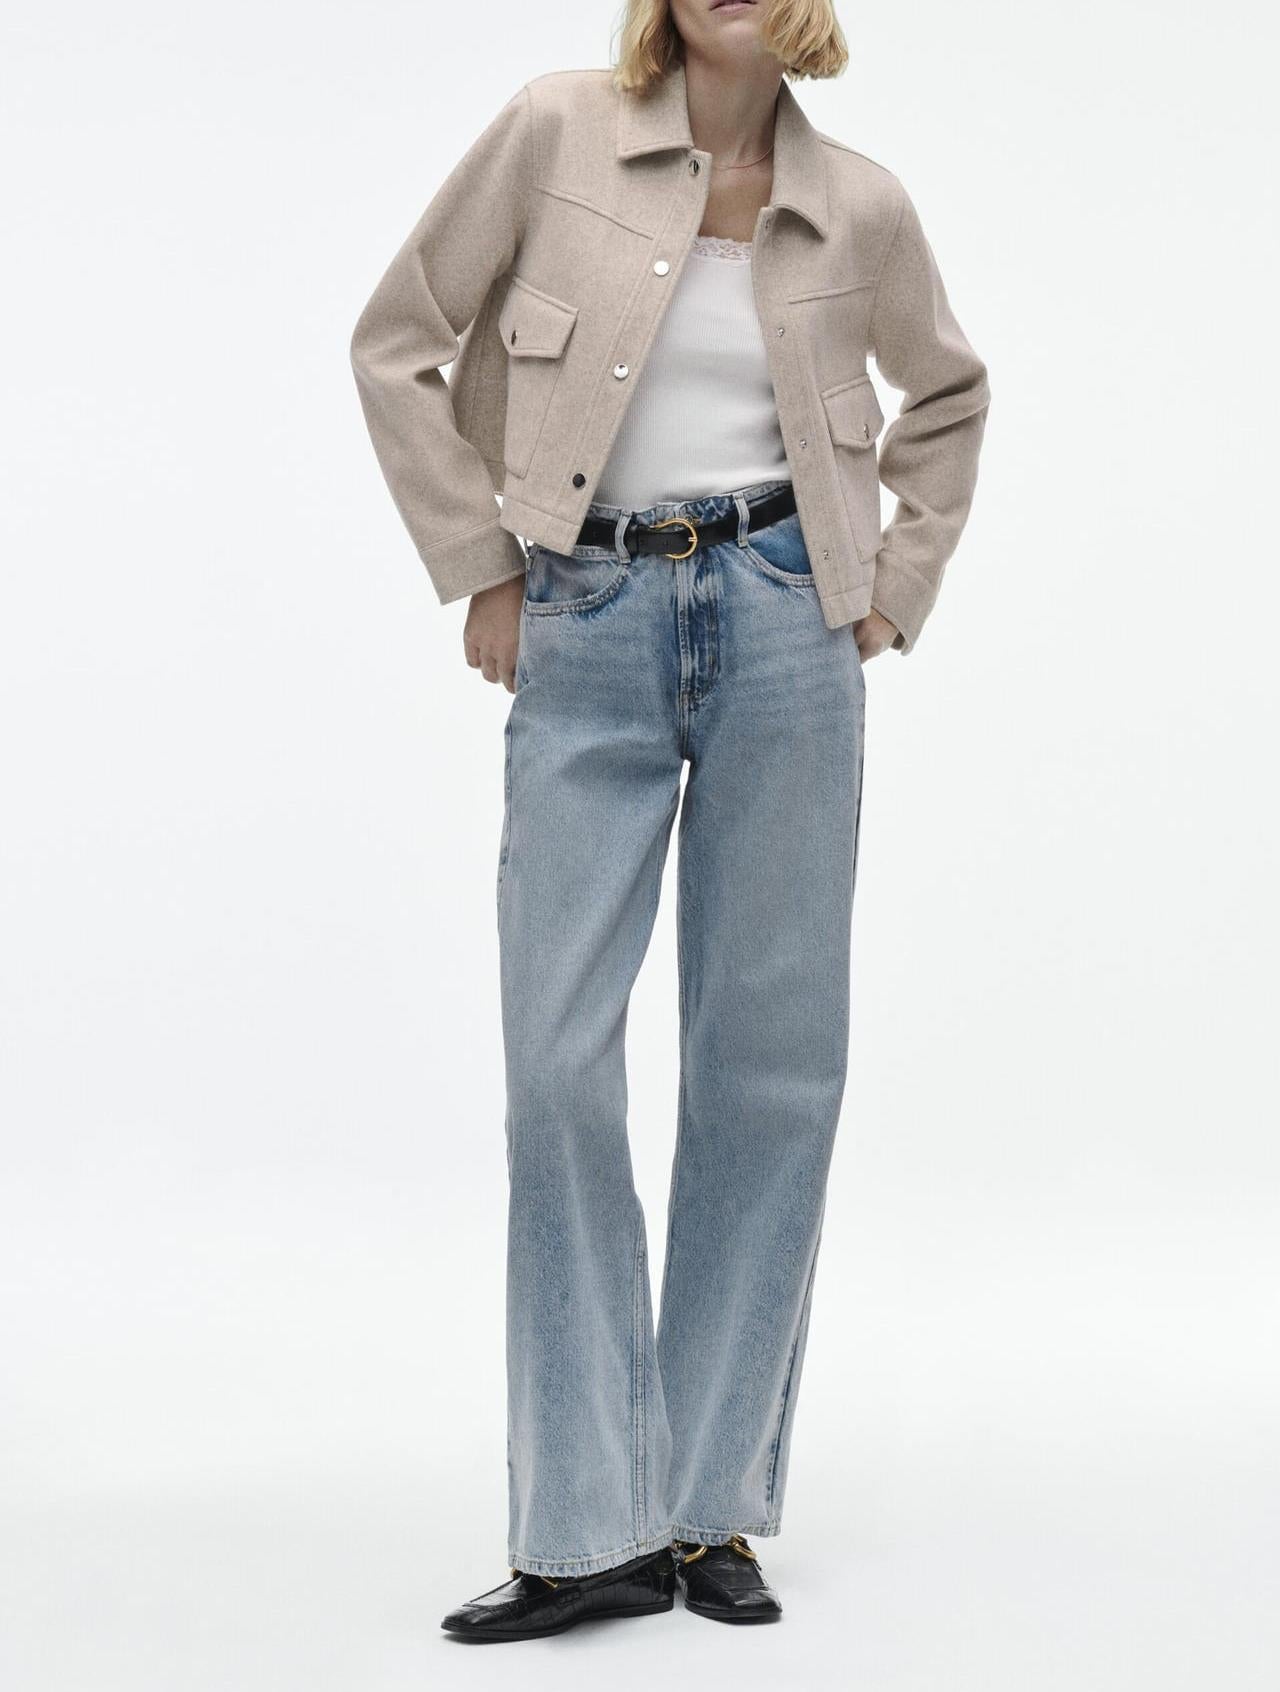 Women's Fashionable Lapel Long Sleeve Soft Jacket